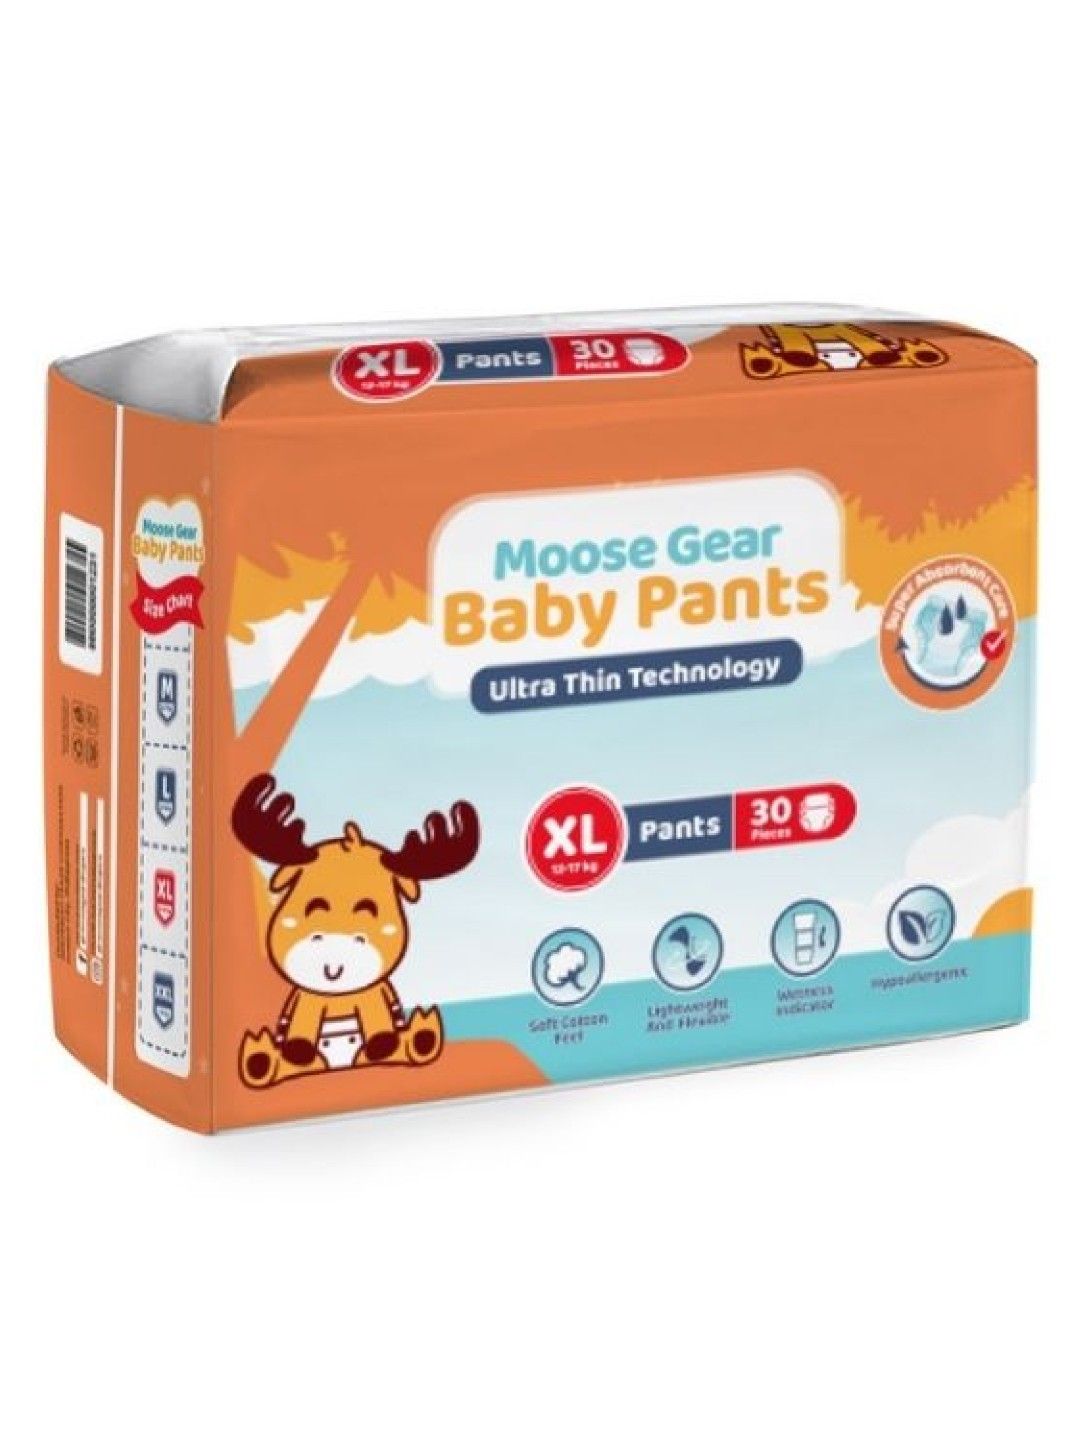 Moose Gear Baby Pants Diapers XL (30 pcs)